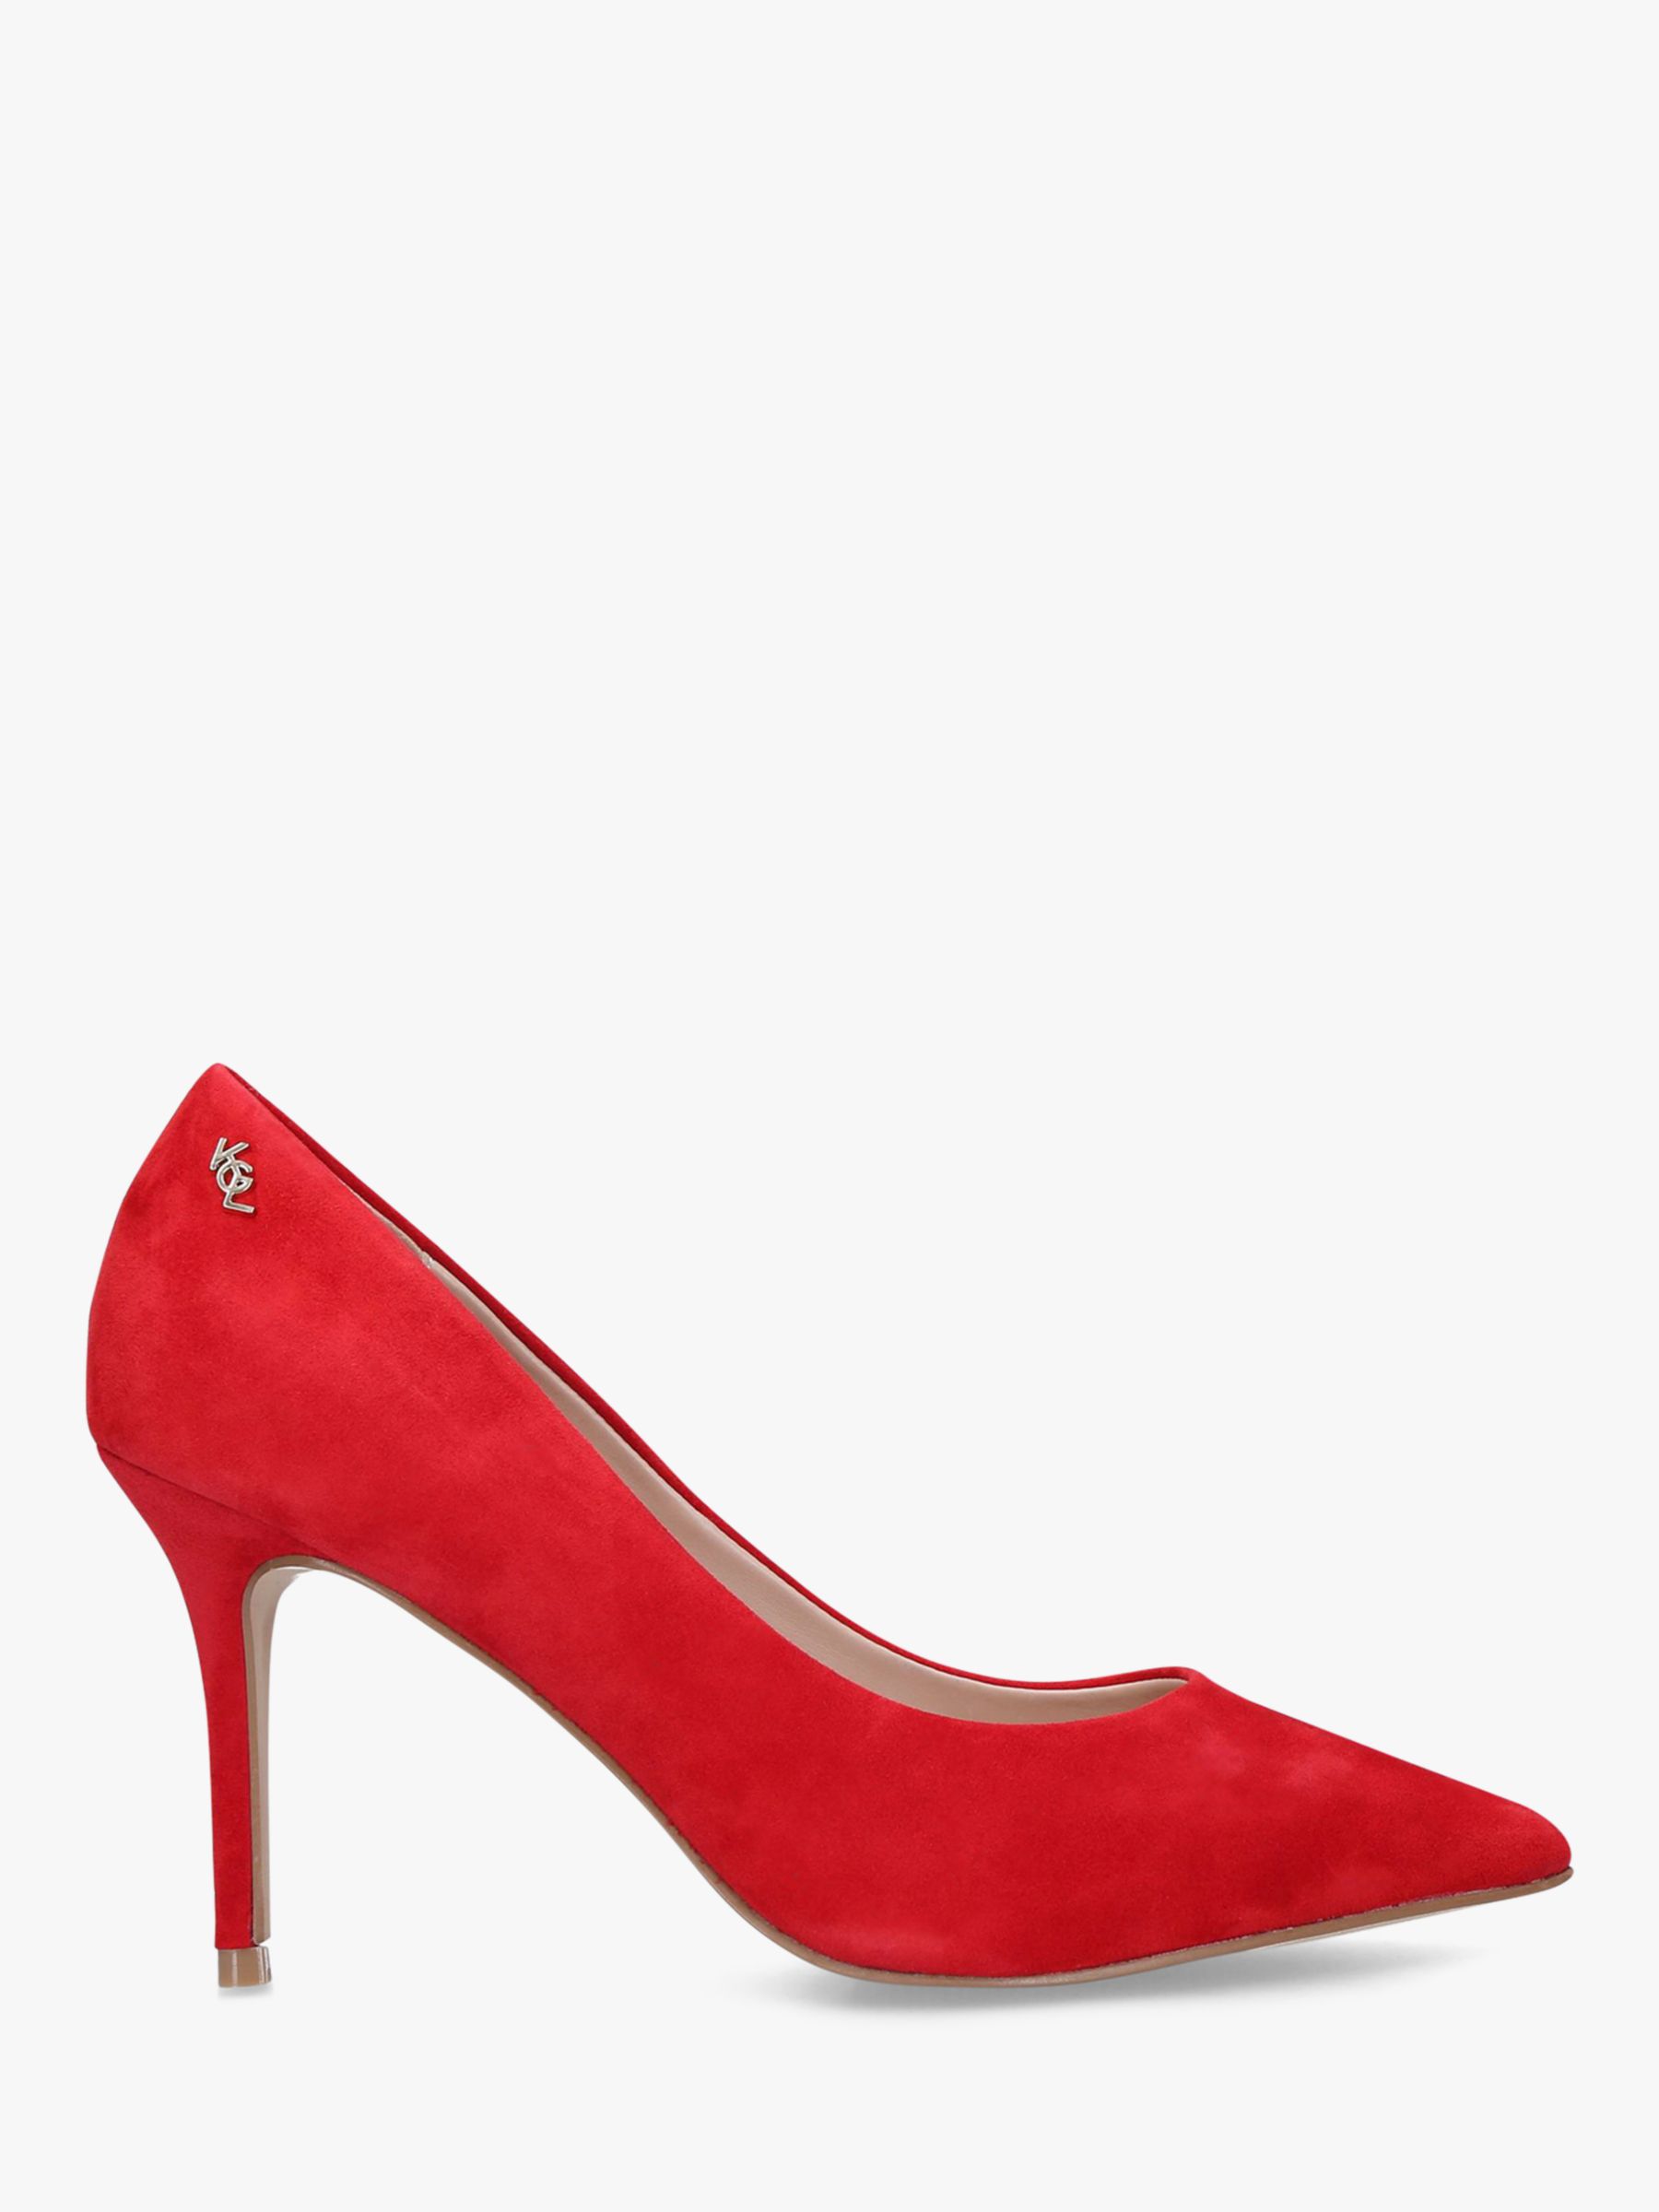 Kurt Geiger London Penina Suede High Heel Court Shoes, Bright Red